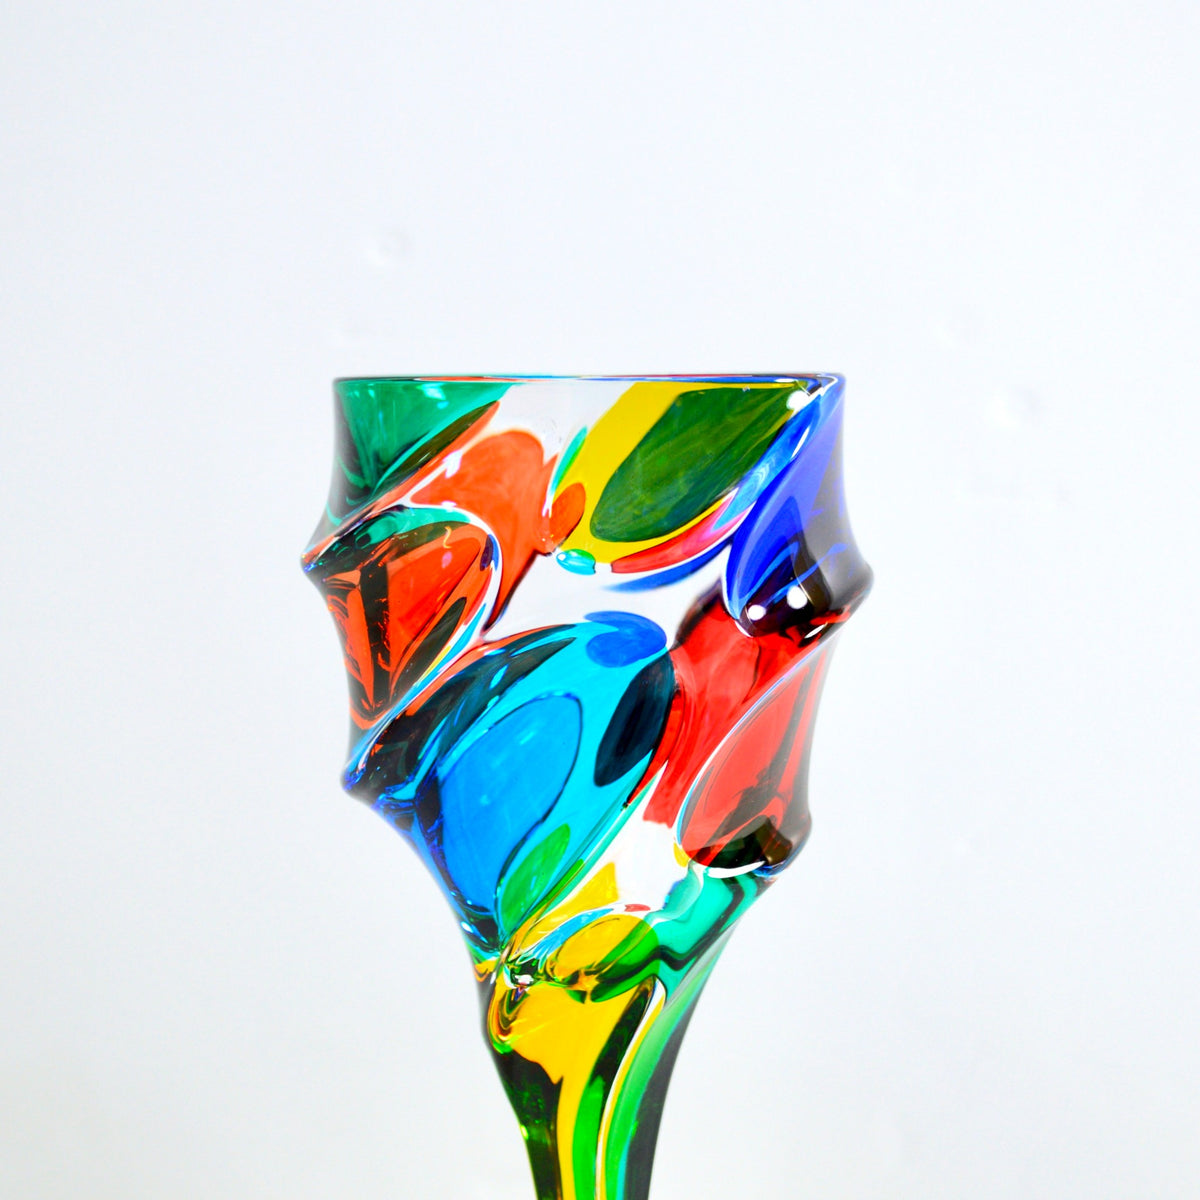 Caly Wine Glasses, Set of 2, Hand Painted Italian Crystal - My Italian Decor